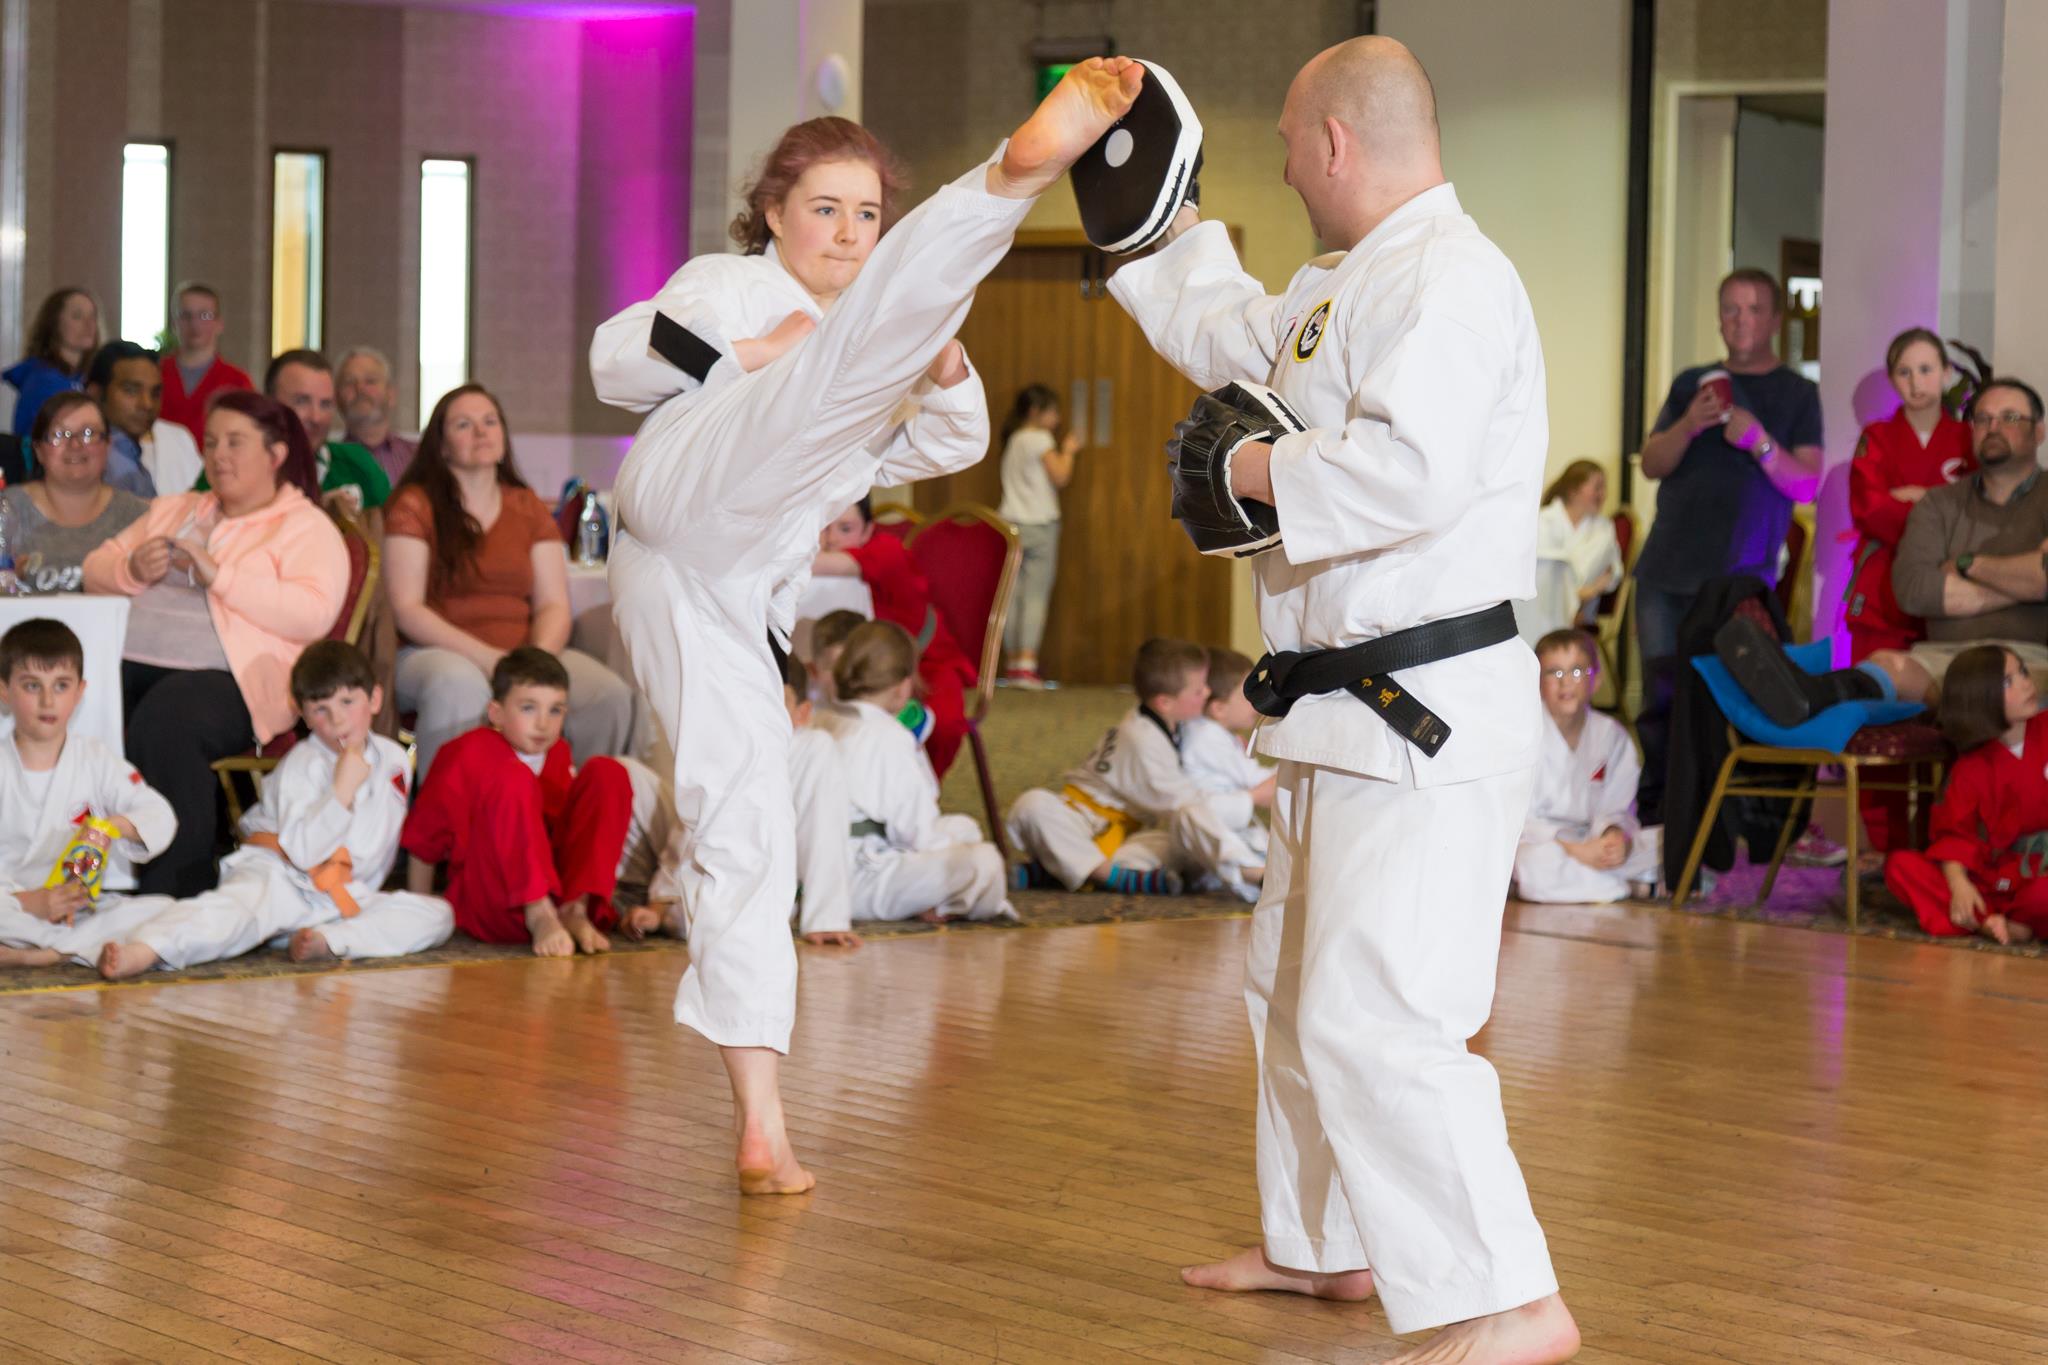 Lesson 9: Karate Takes Discipline – Elite Karate Academy & Personal